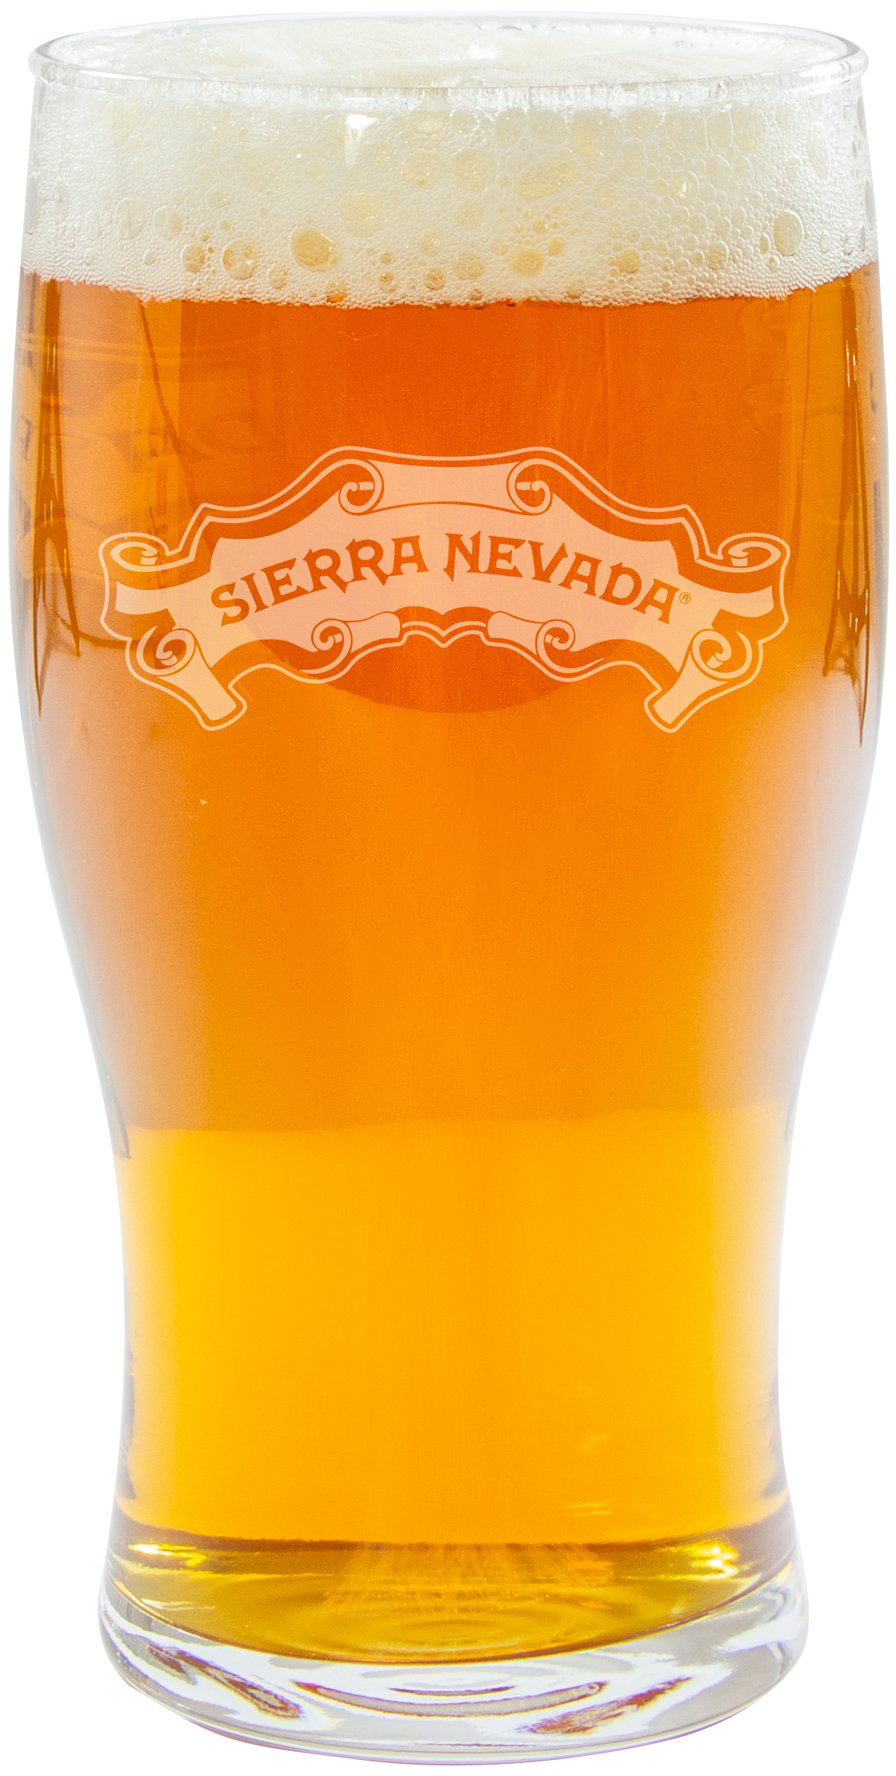 Sierra Nevada Pint Glass Set of 4 Glasses